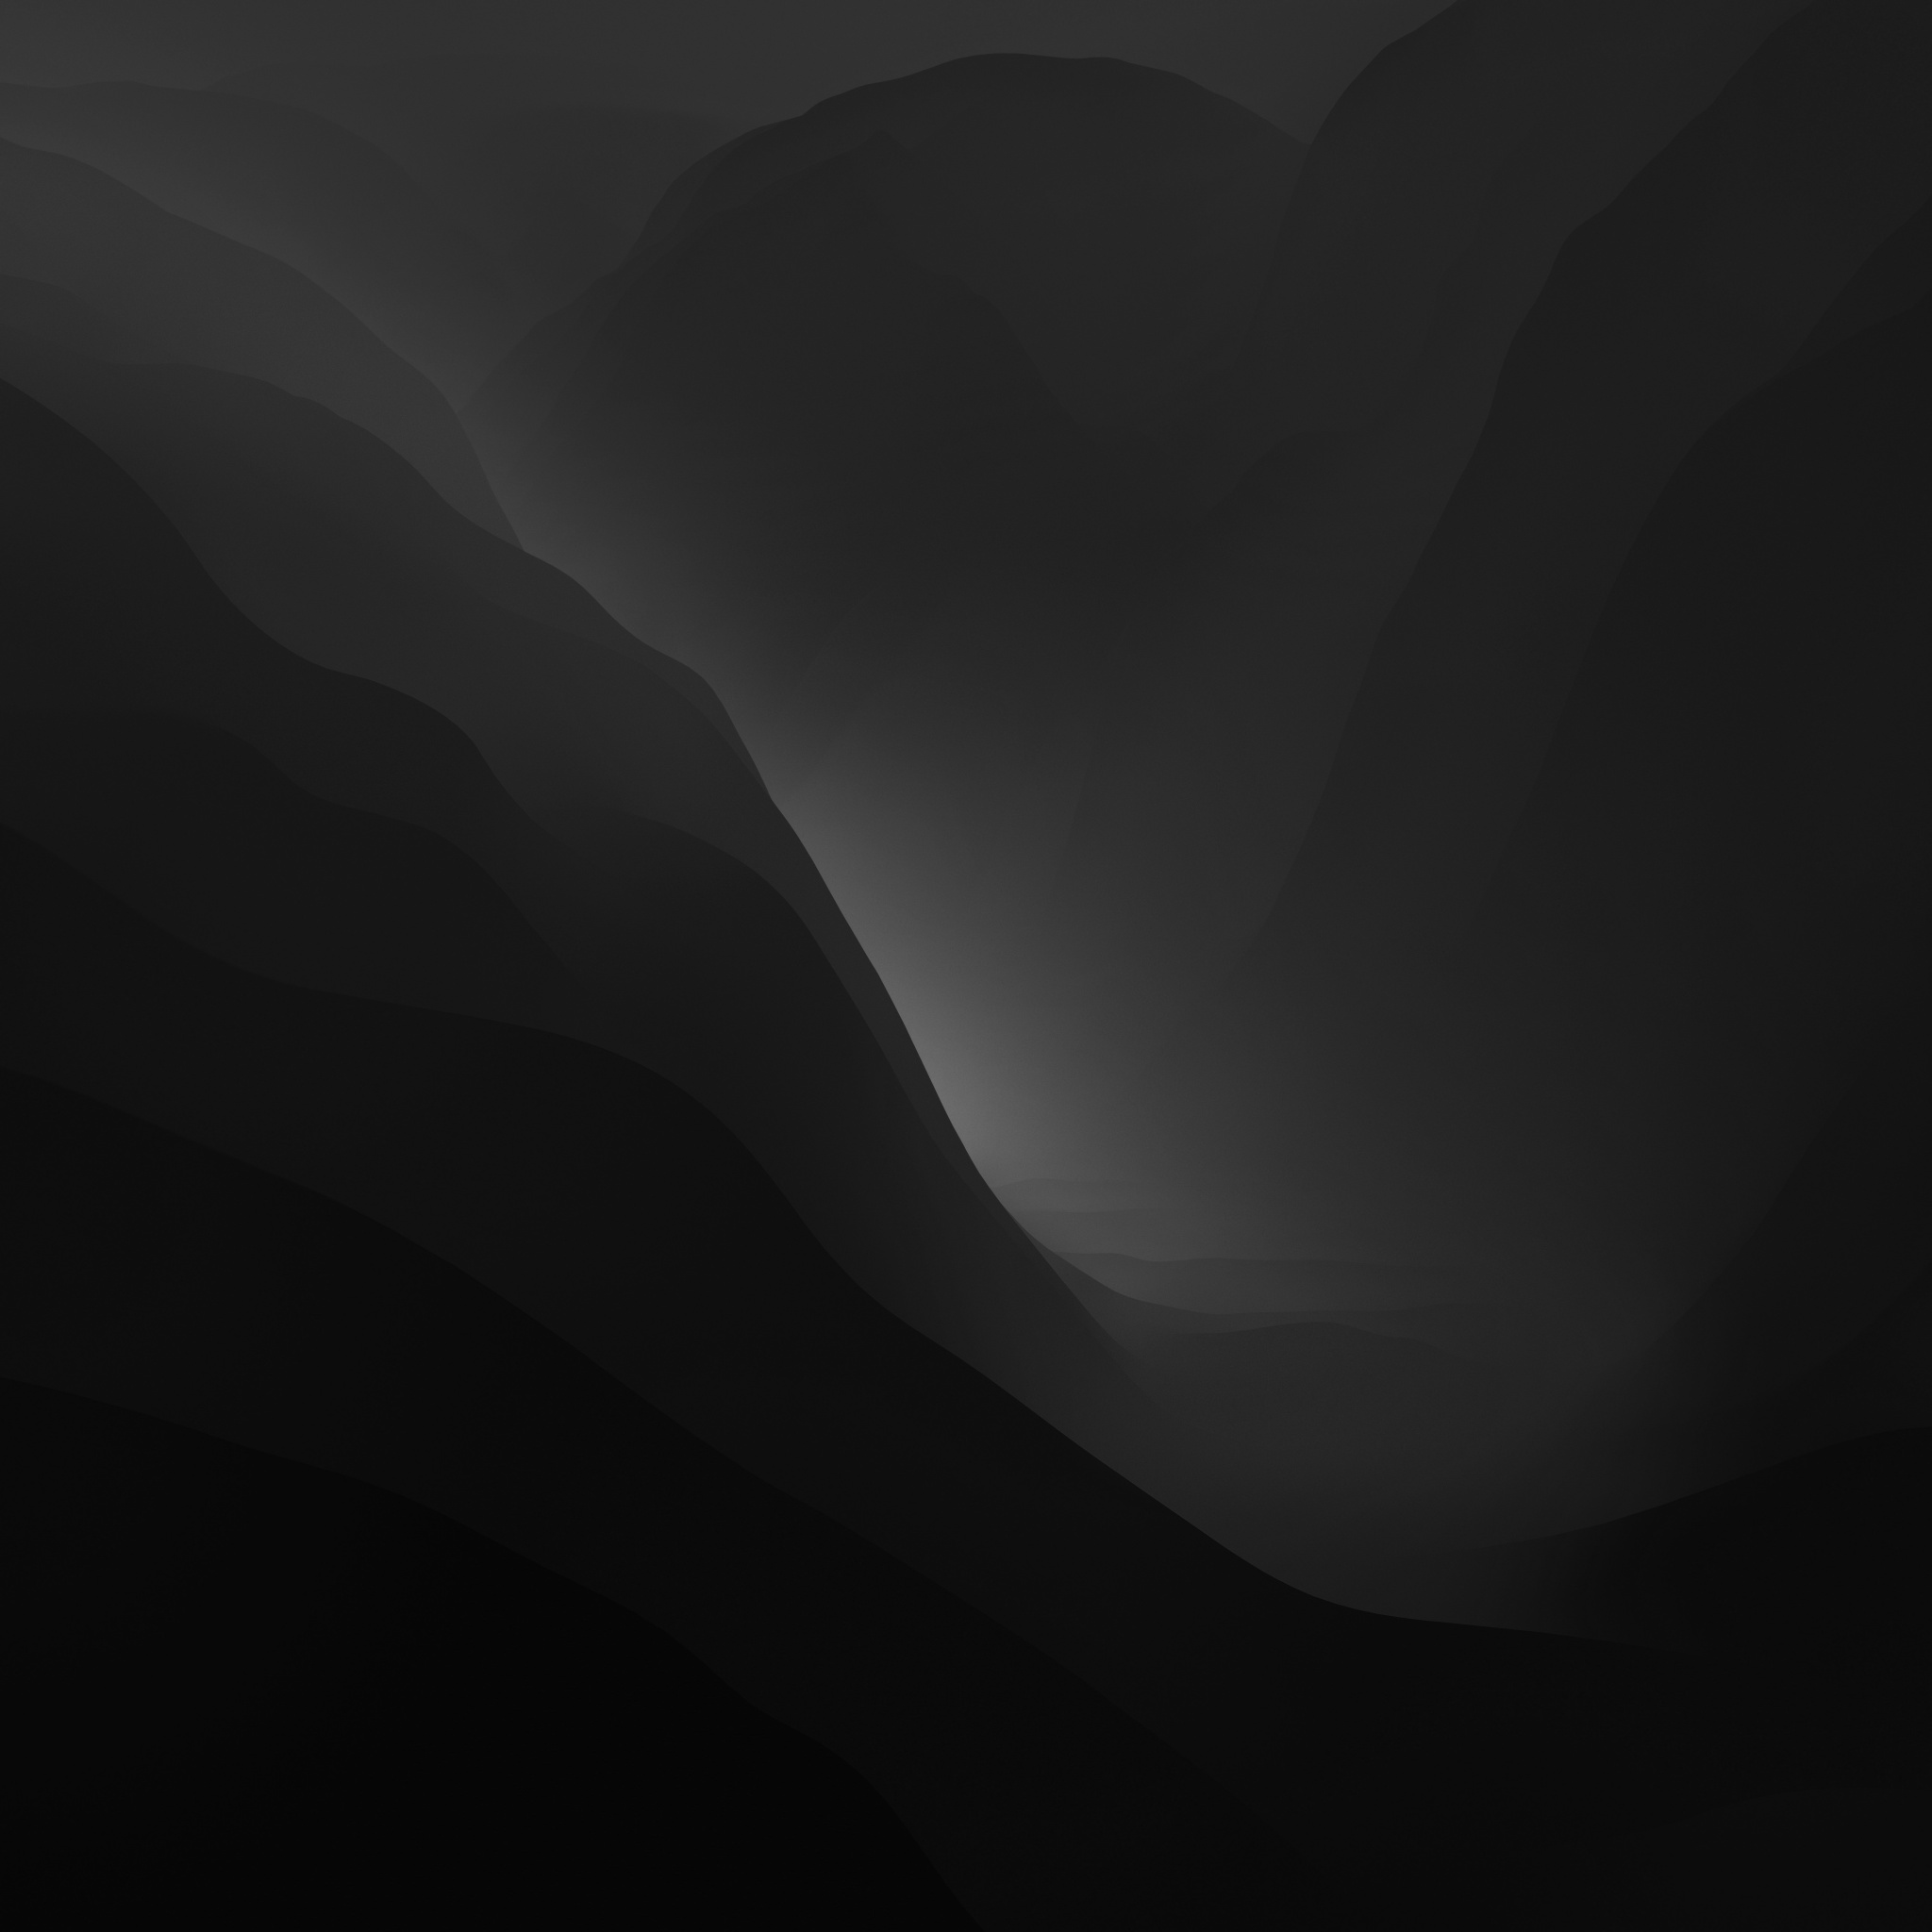 Abstract Action Dark Black iPad Wallpaper